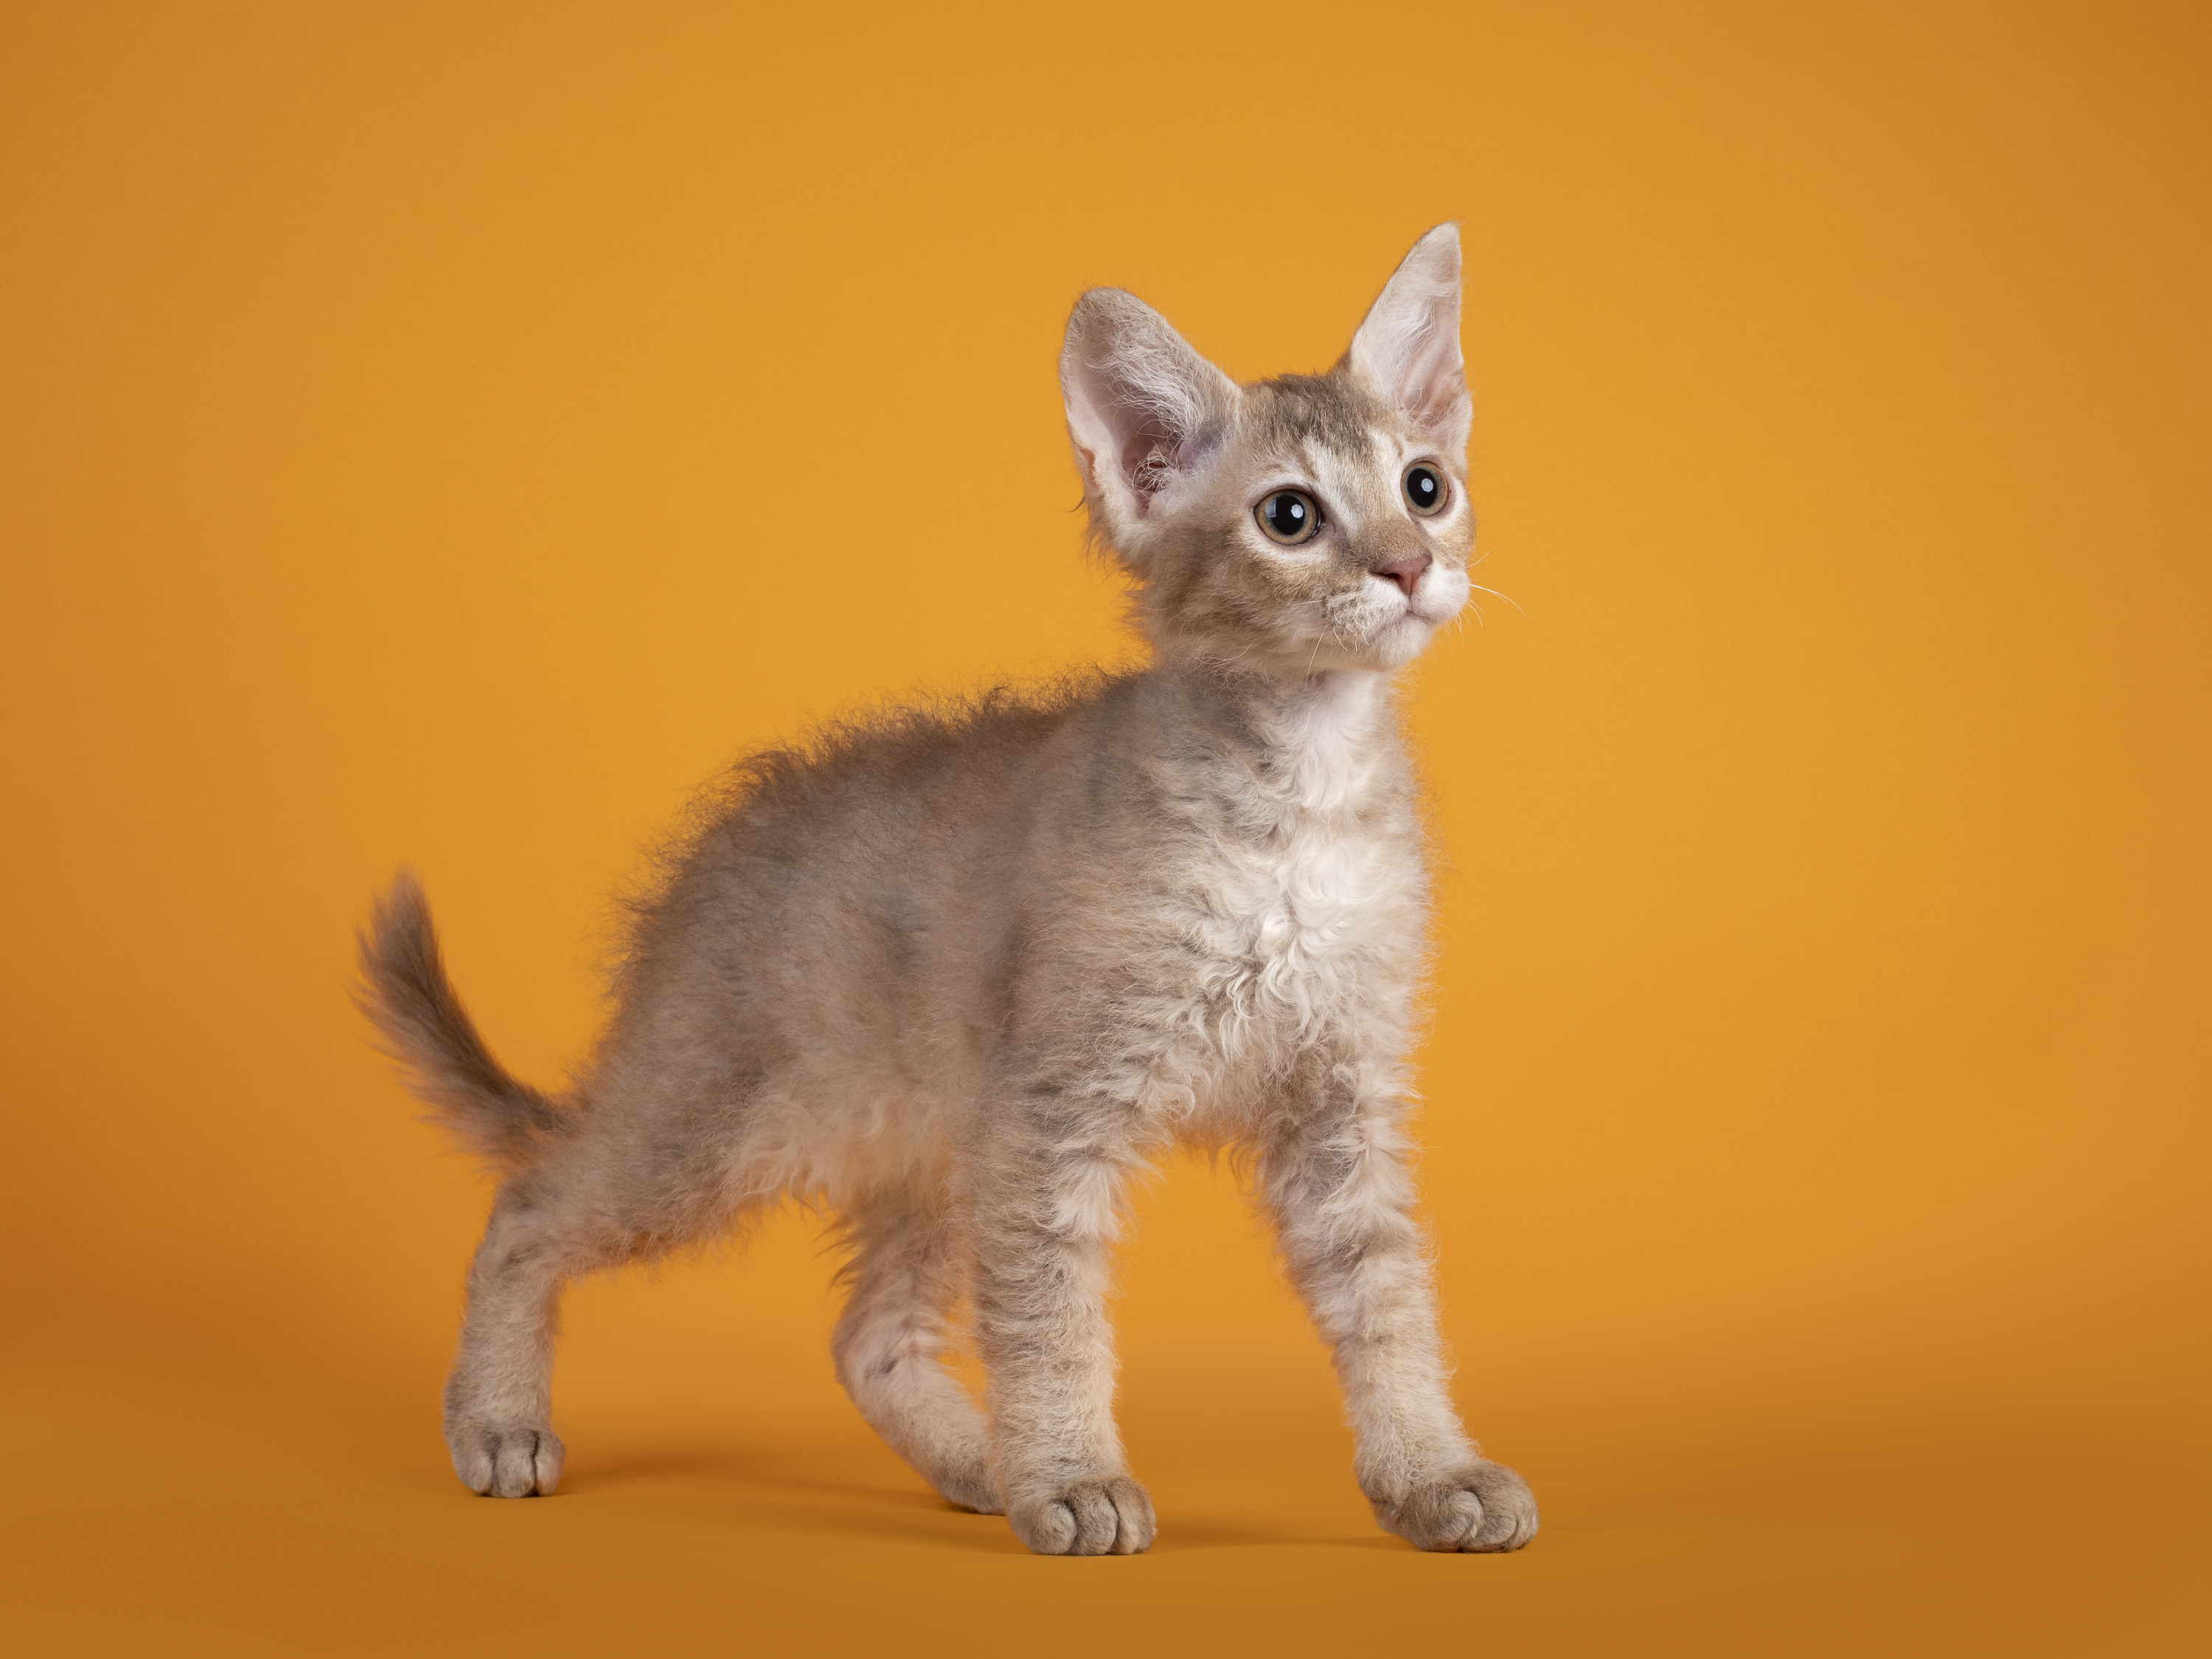 Cute LaPerm cat kitten, sitting up, standing side ways